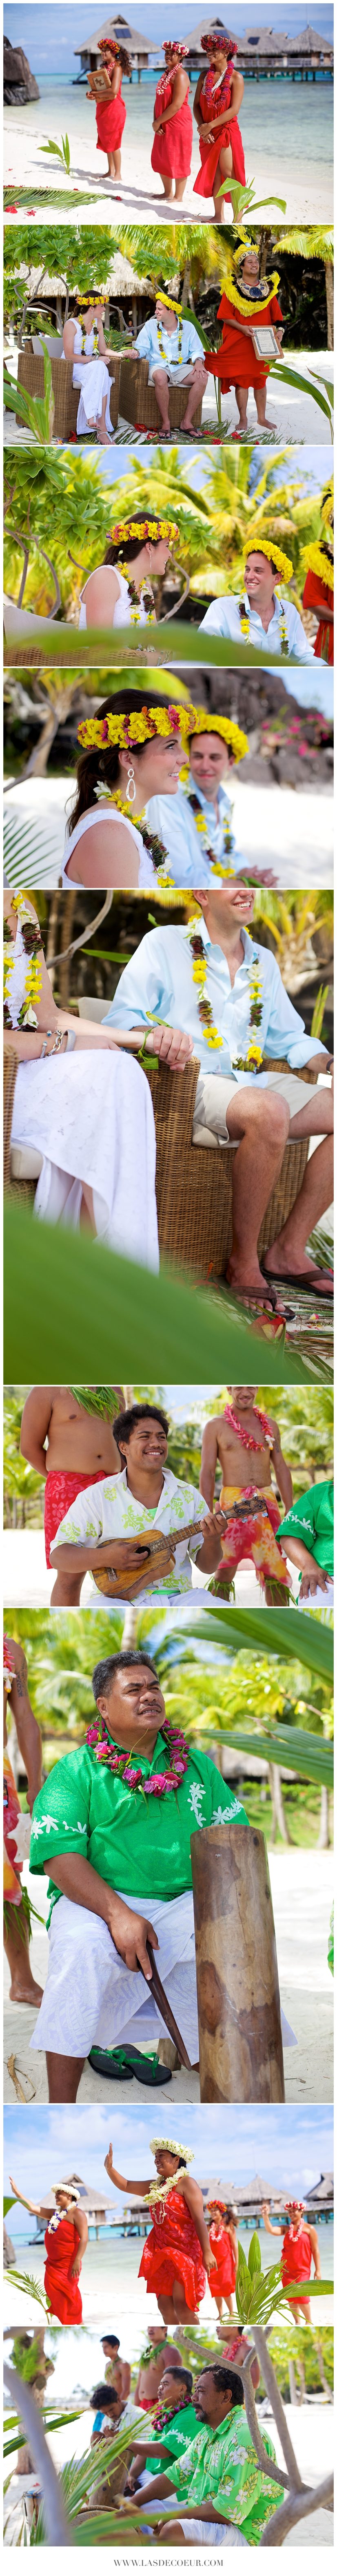 Mariage dans les iles Bora Bora Tahiti cérémonie polynesienne ©lasdecoeur